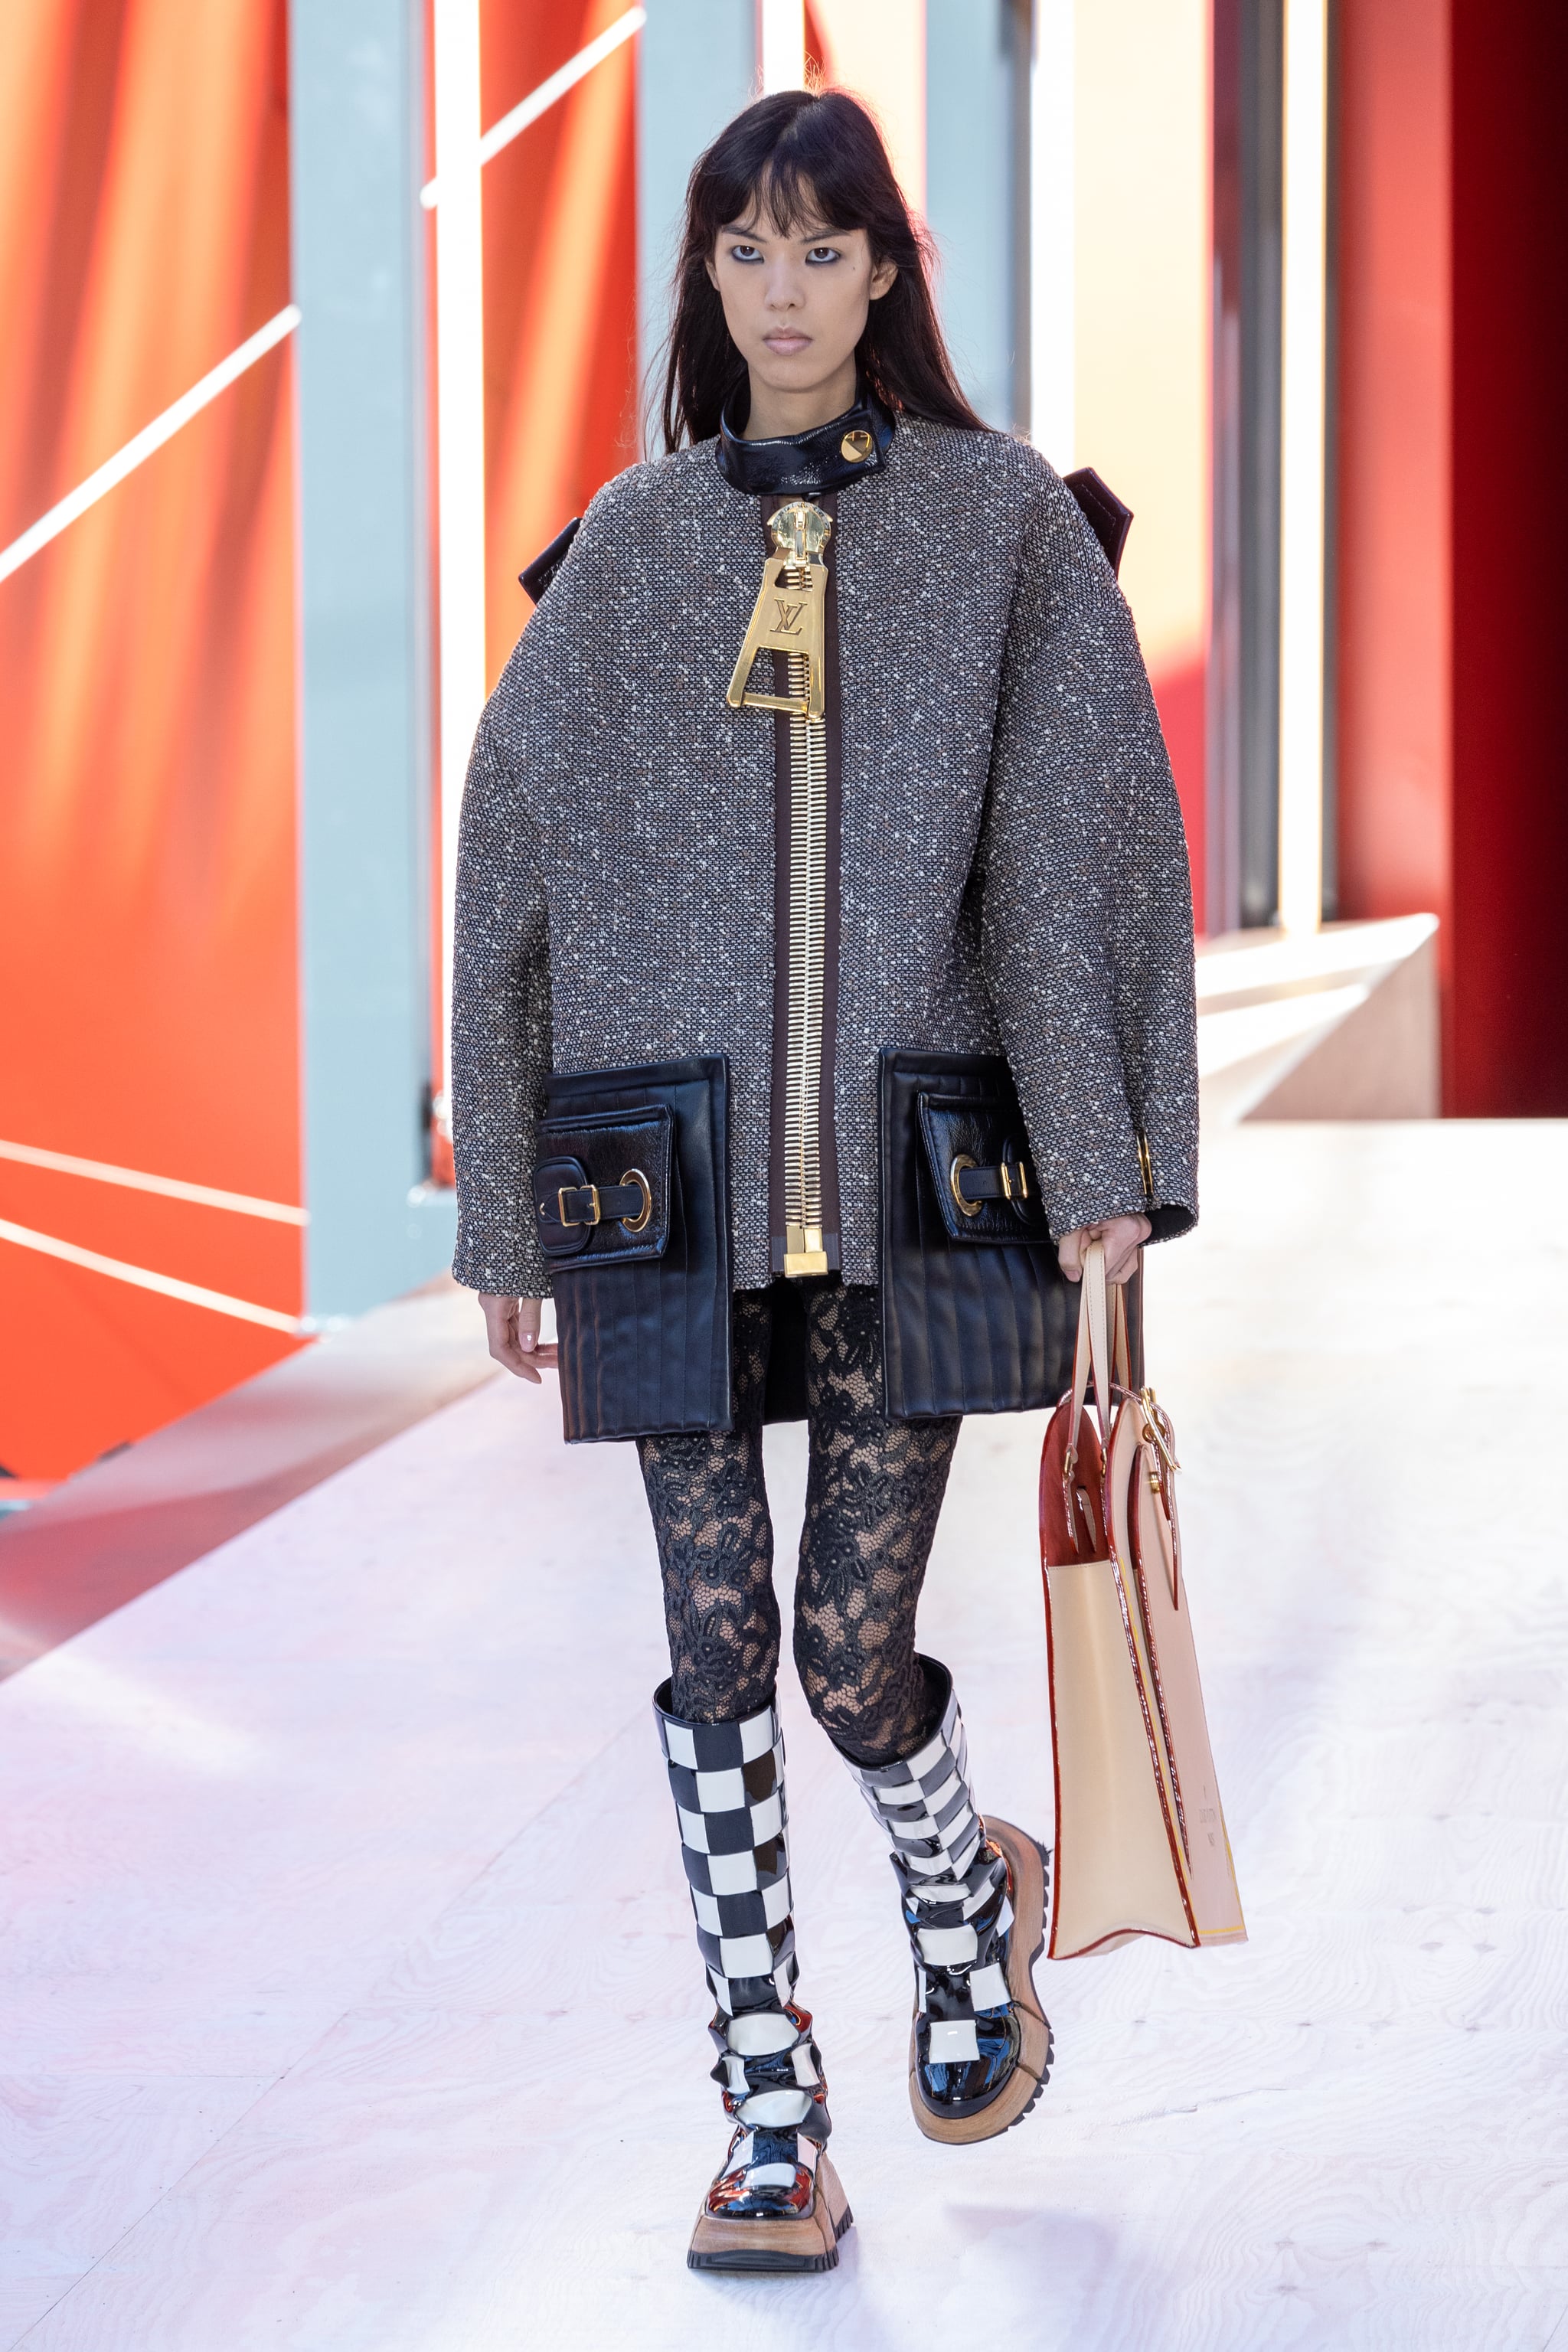 Jaden Smith Wins Fashion Week in a Mirrored Crop Top at Louis Vuitton